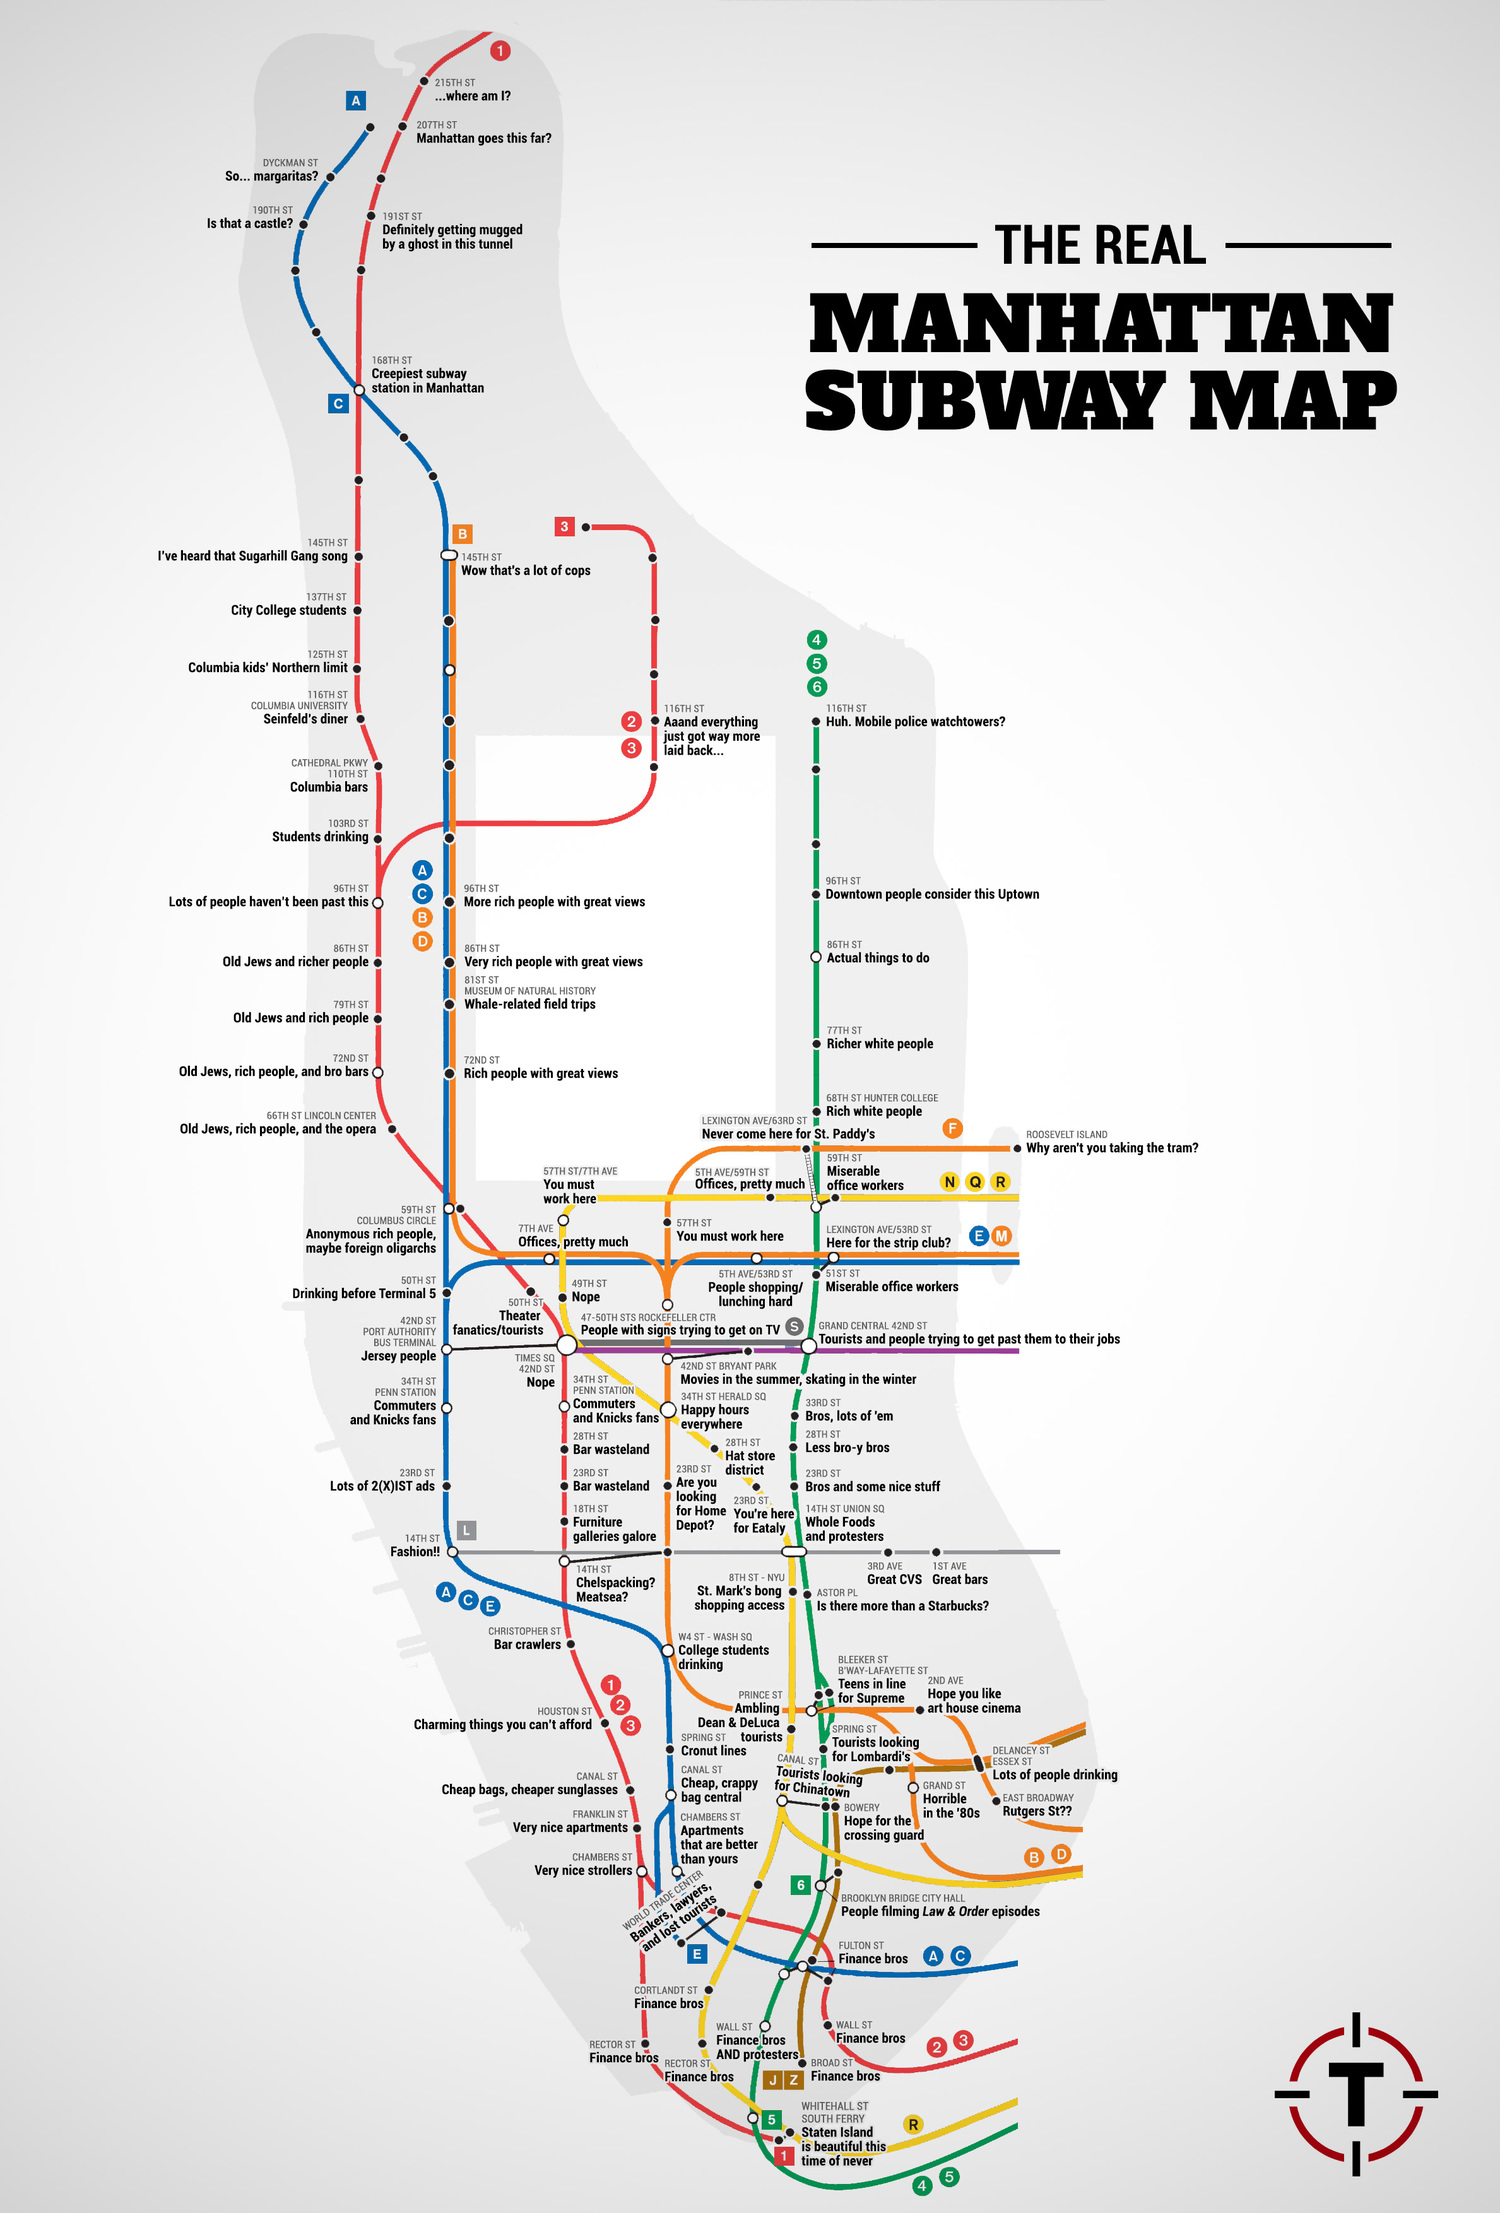 Thrillist Imagines the Real Manhattan Subway Map